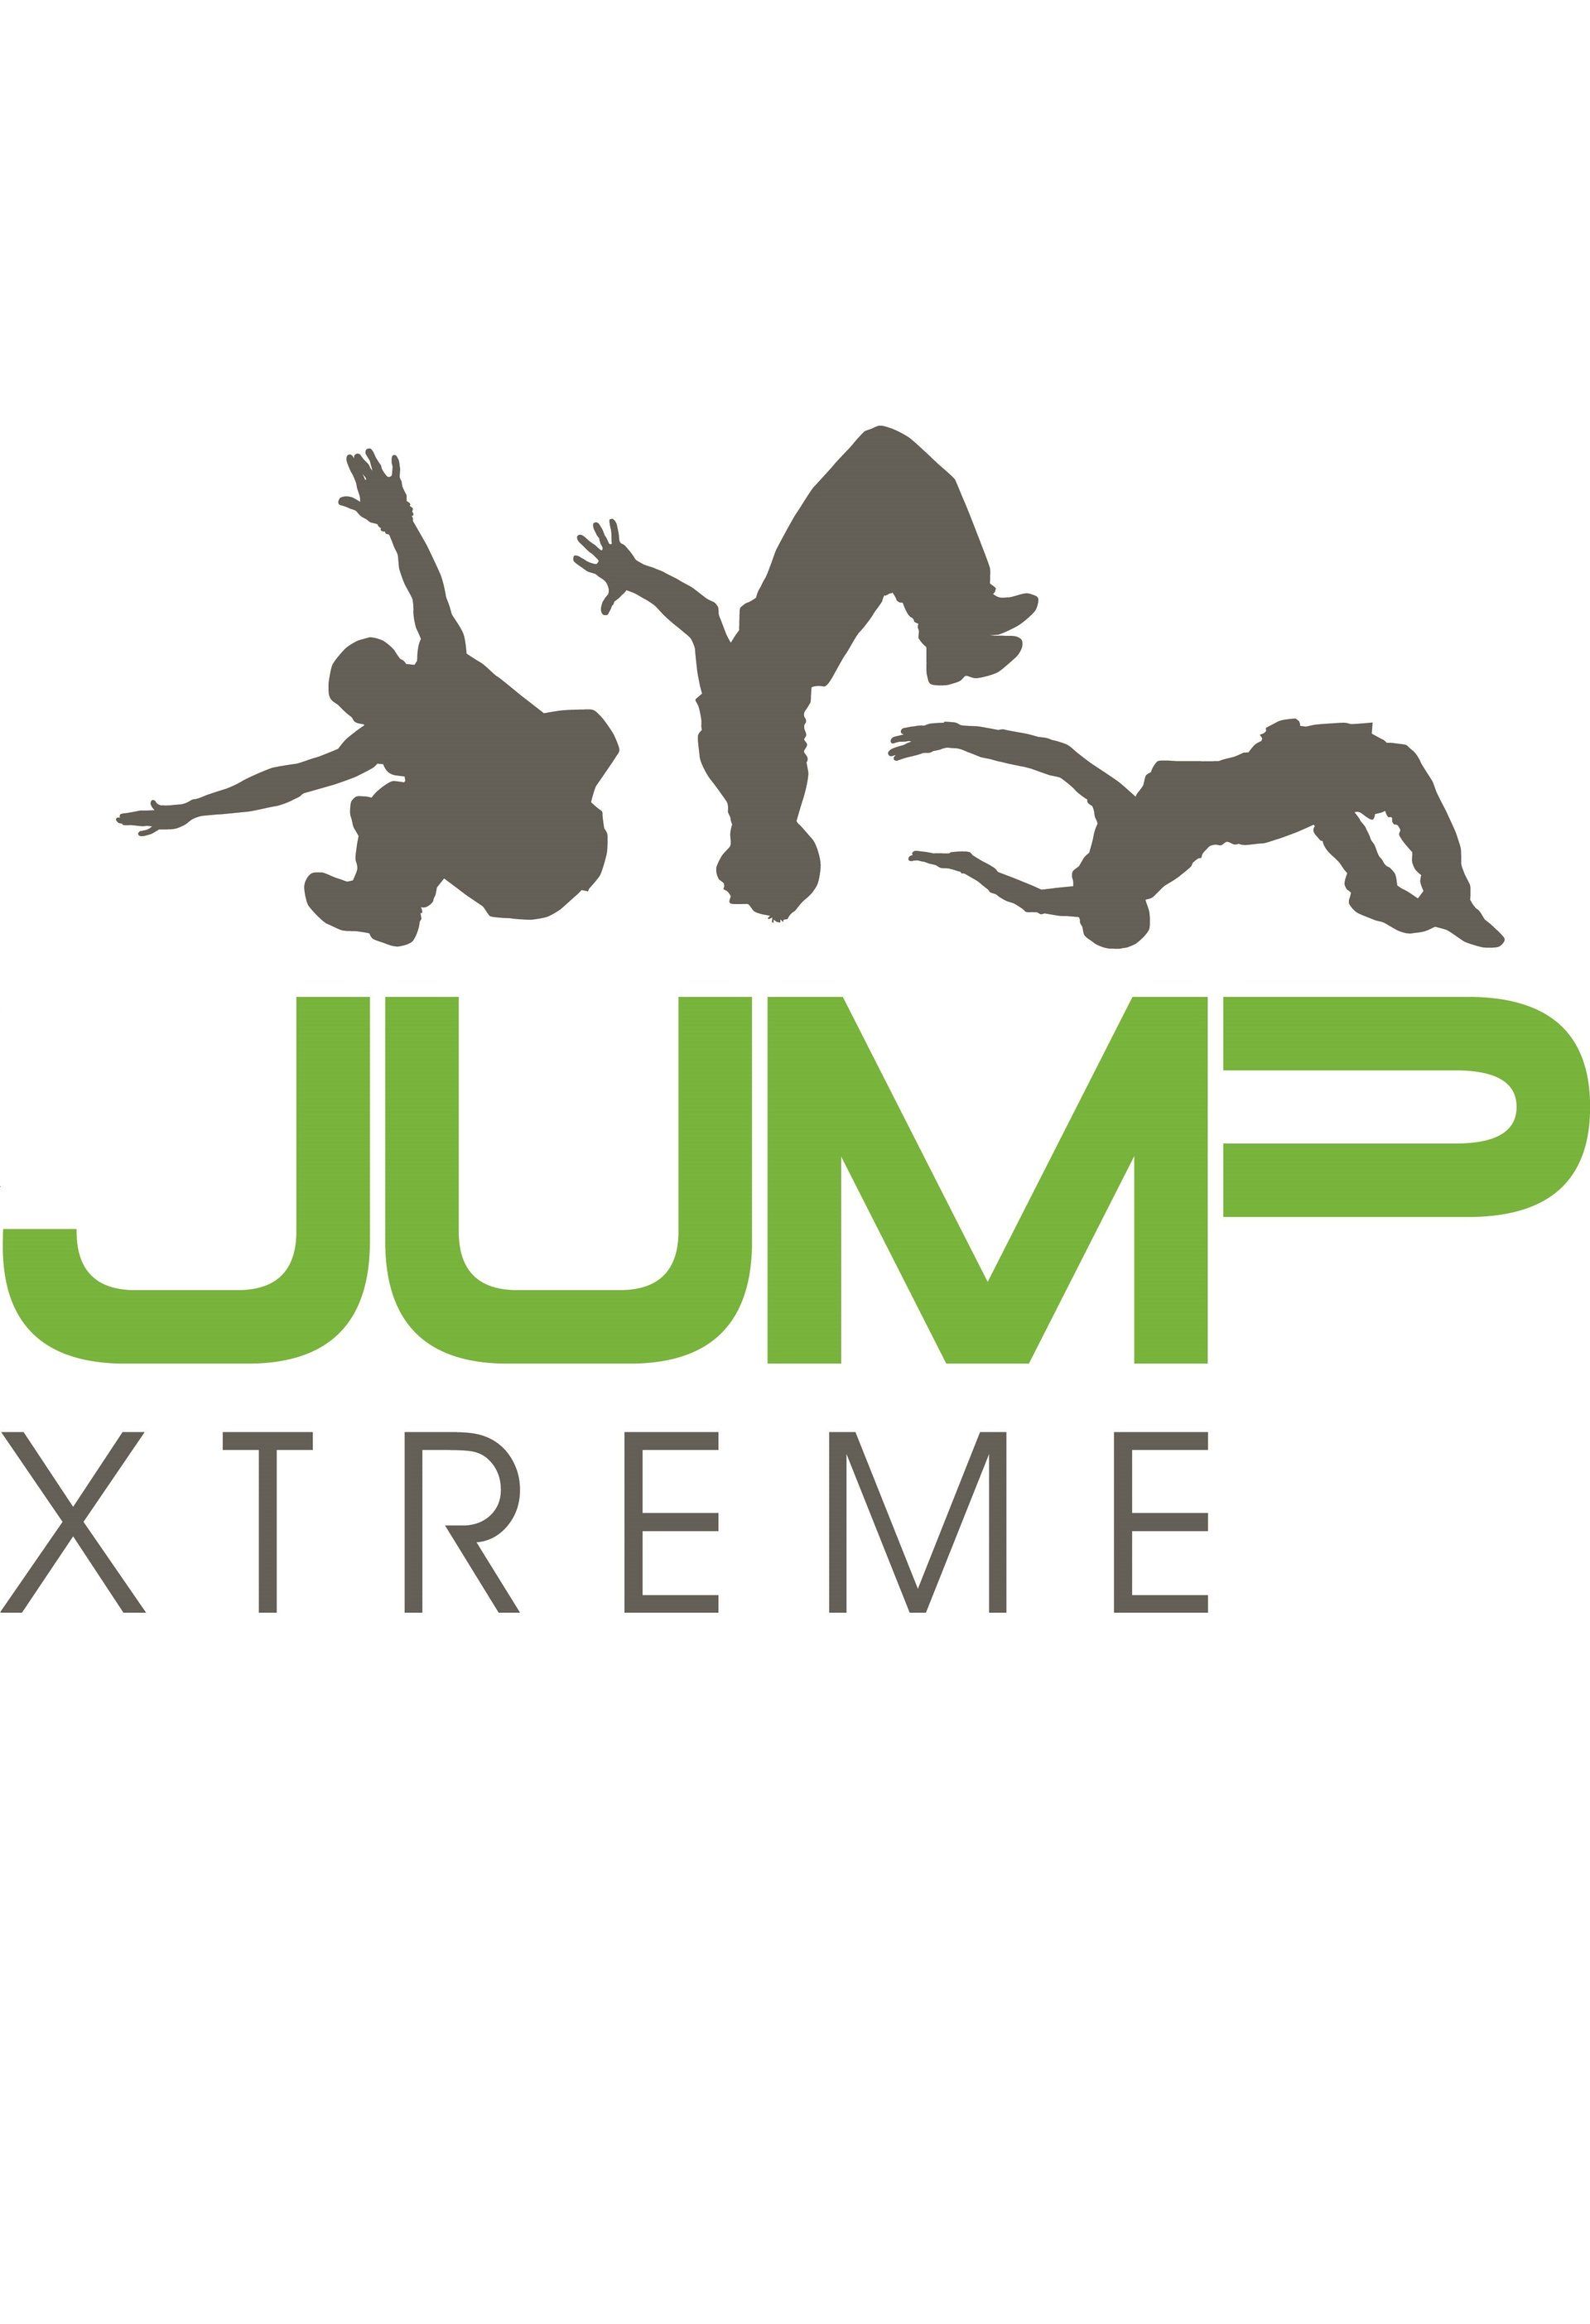 Jump xtreme logo